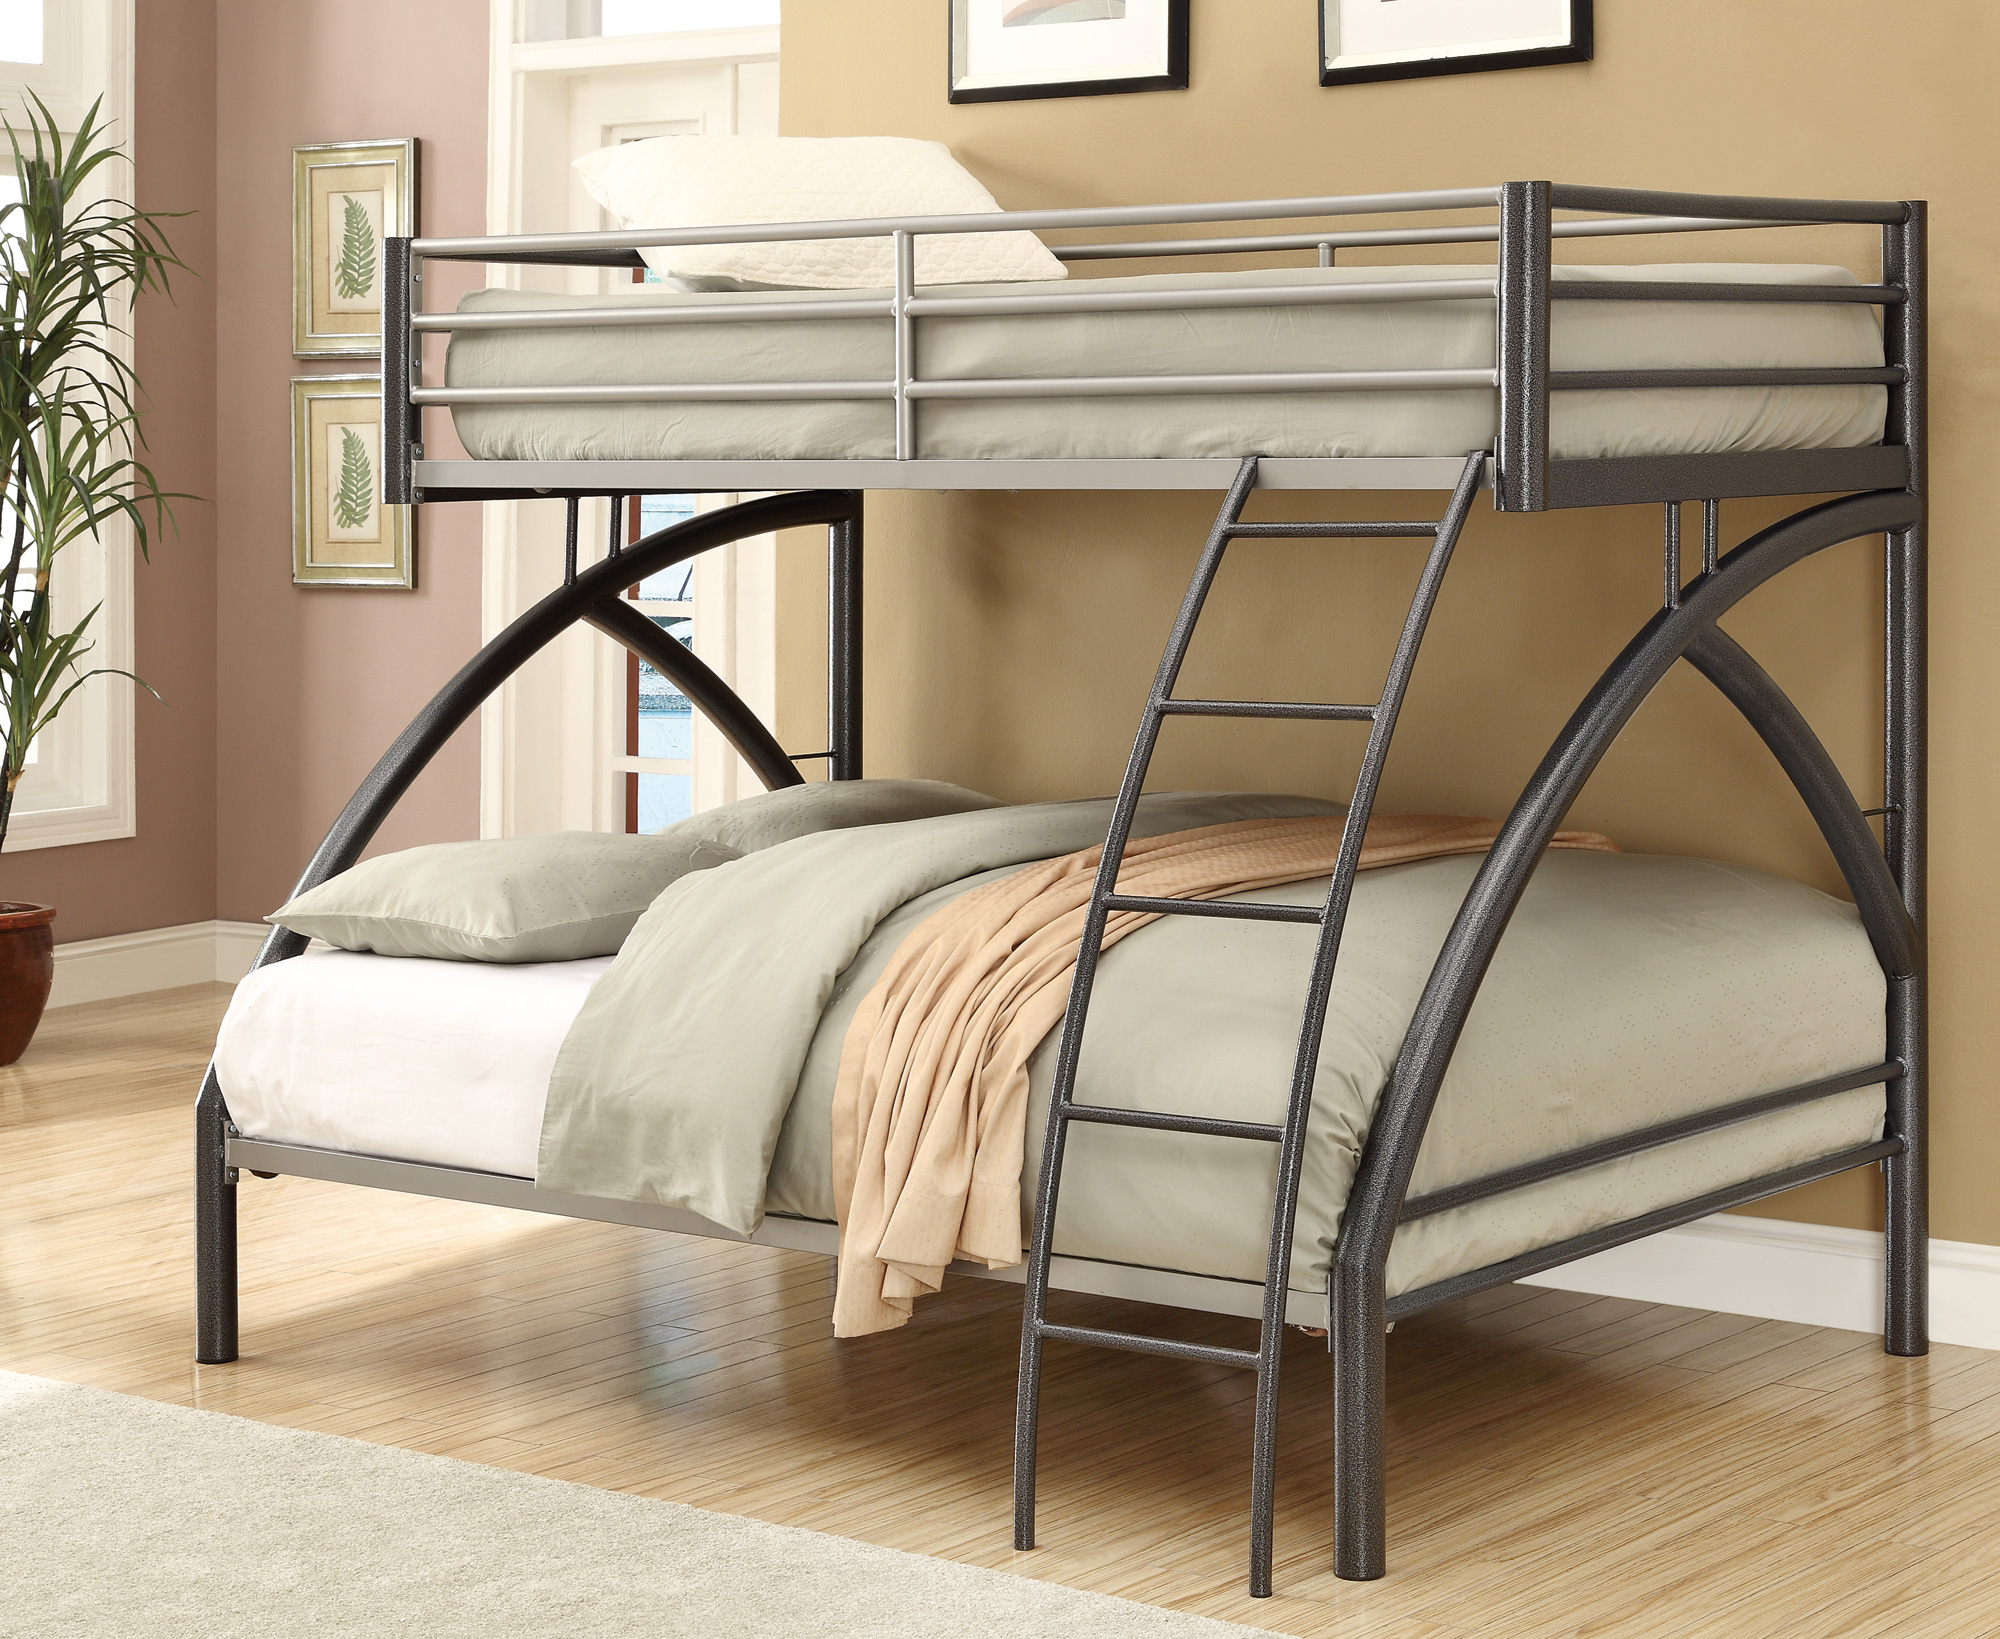 double decker beds designs